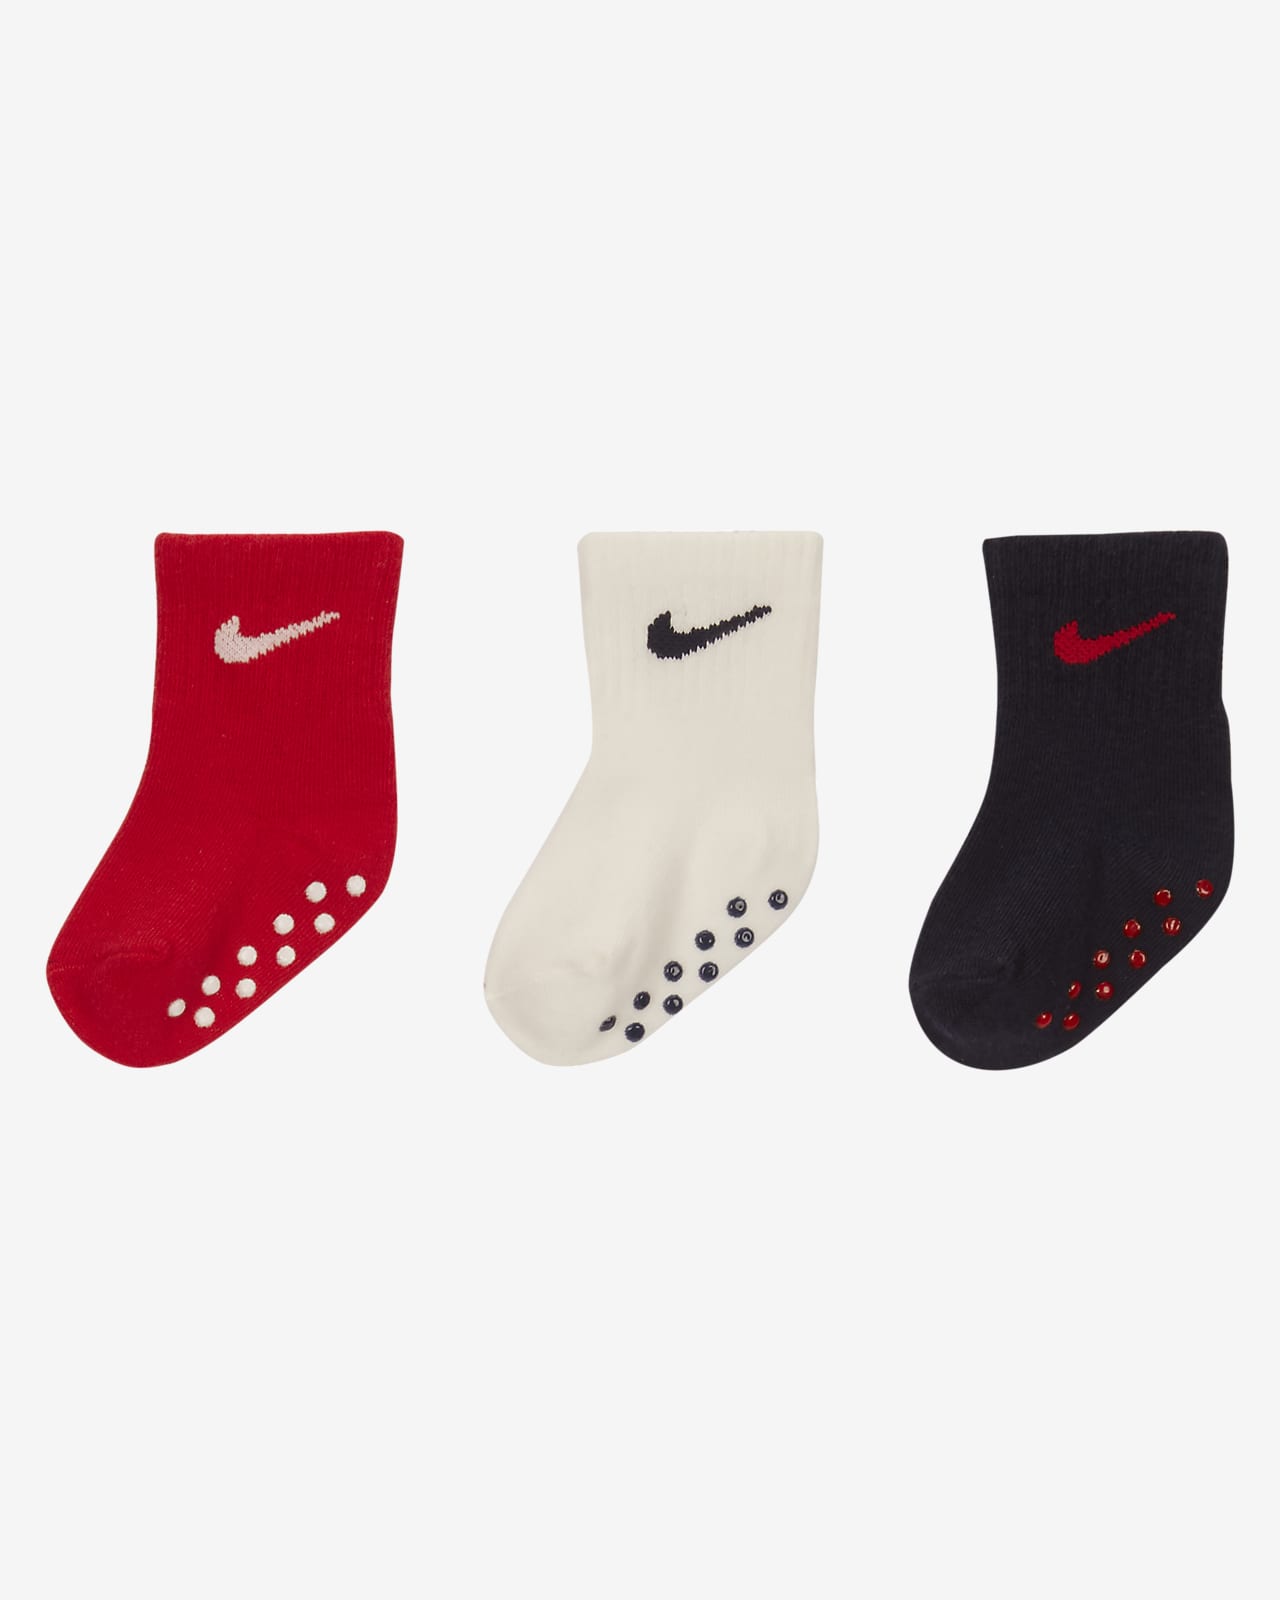 Nike Baby (6-12M) Gripper Ankle Socks (3 Pairs)